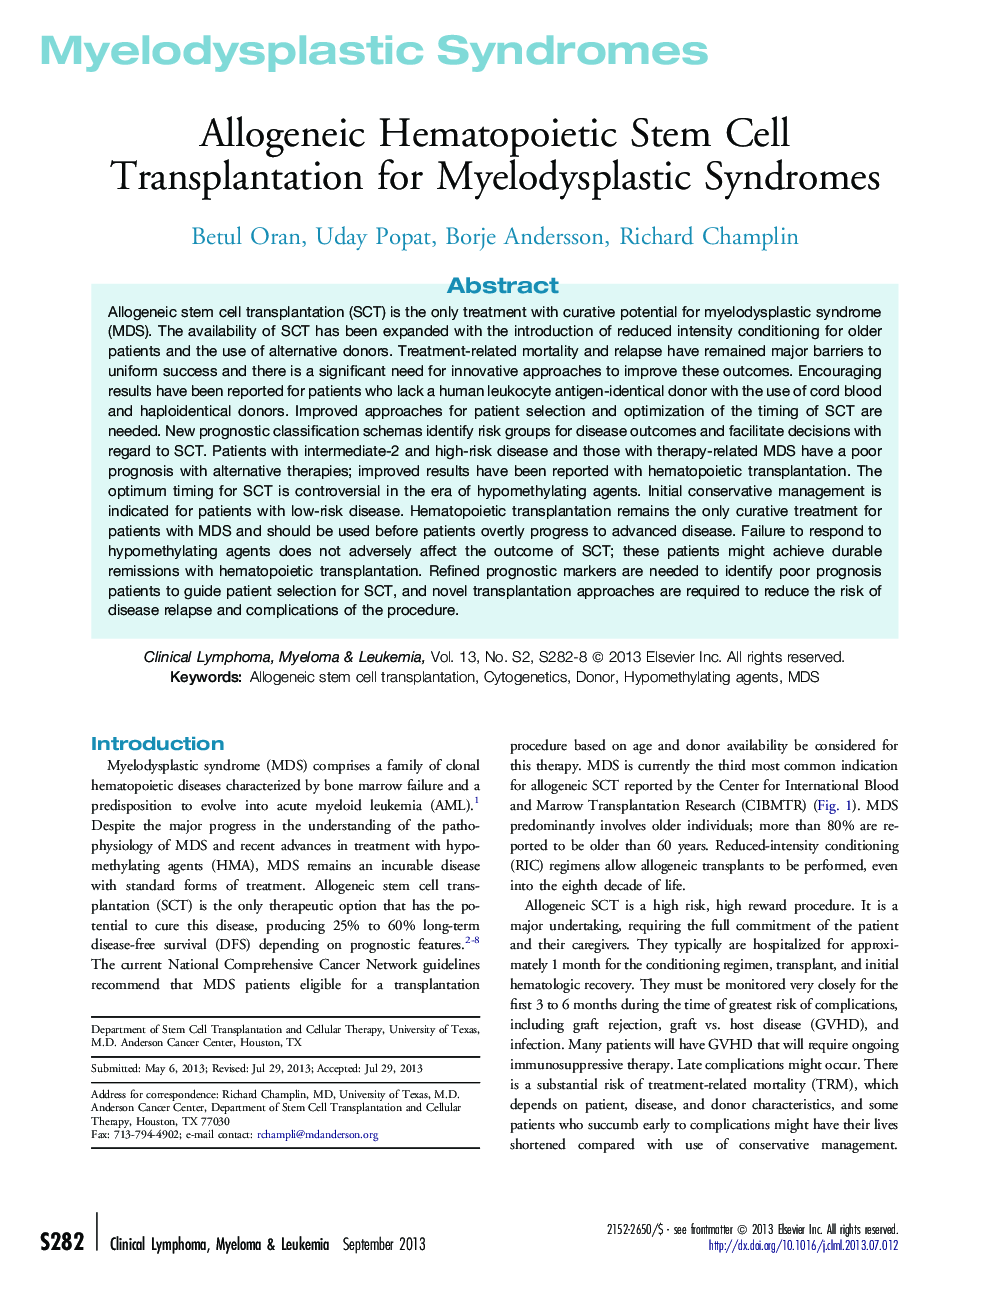 Allogeneic Hematopoietic Stem Cell Transplantation for Myelodysplastic Syndromes